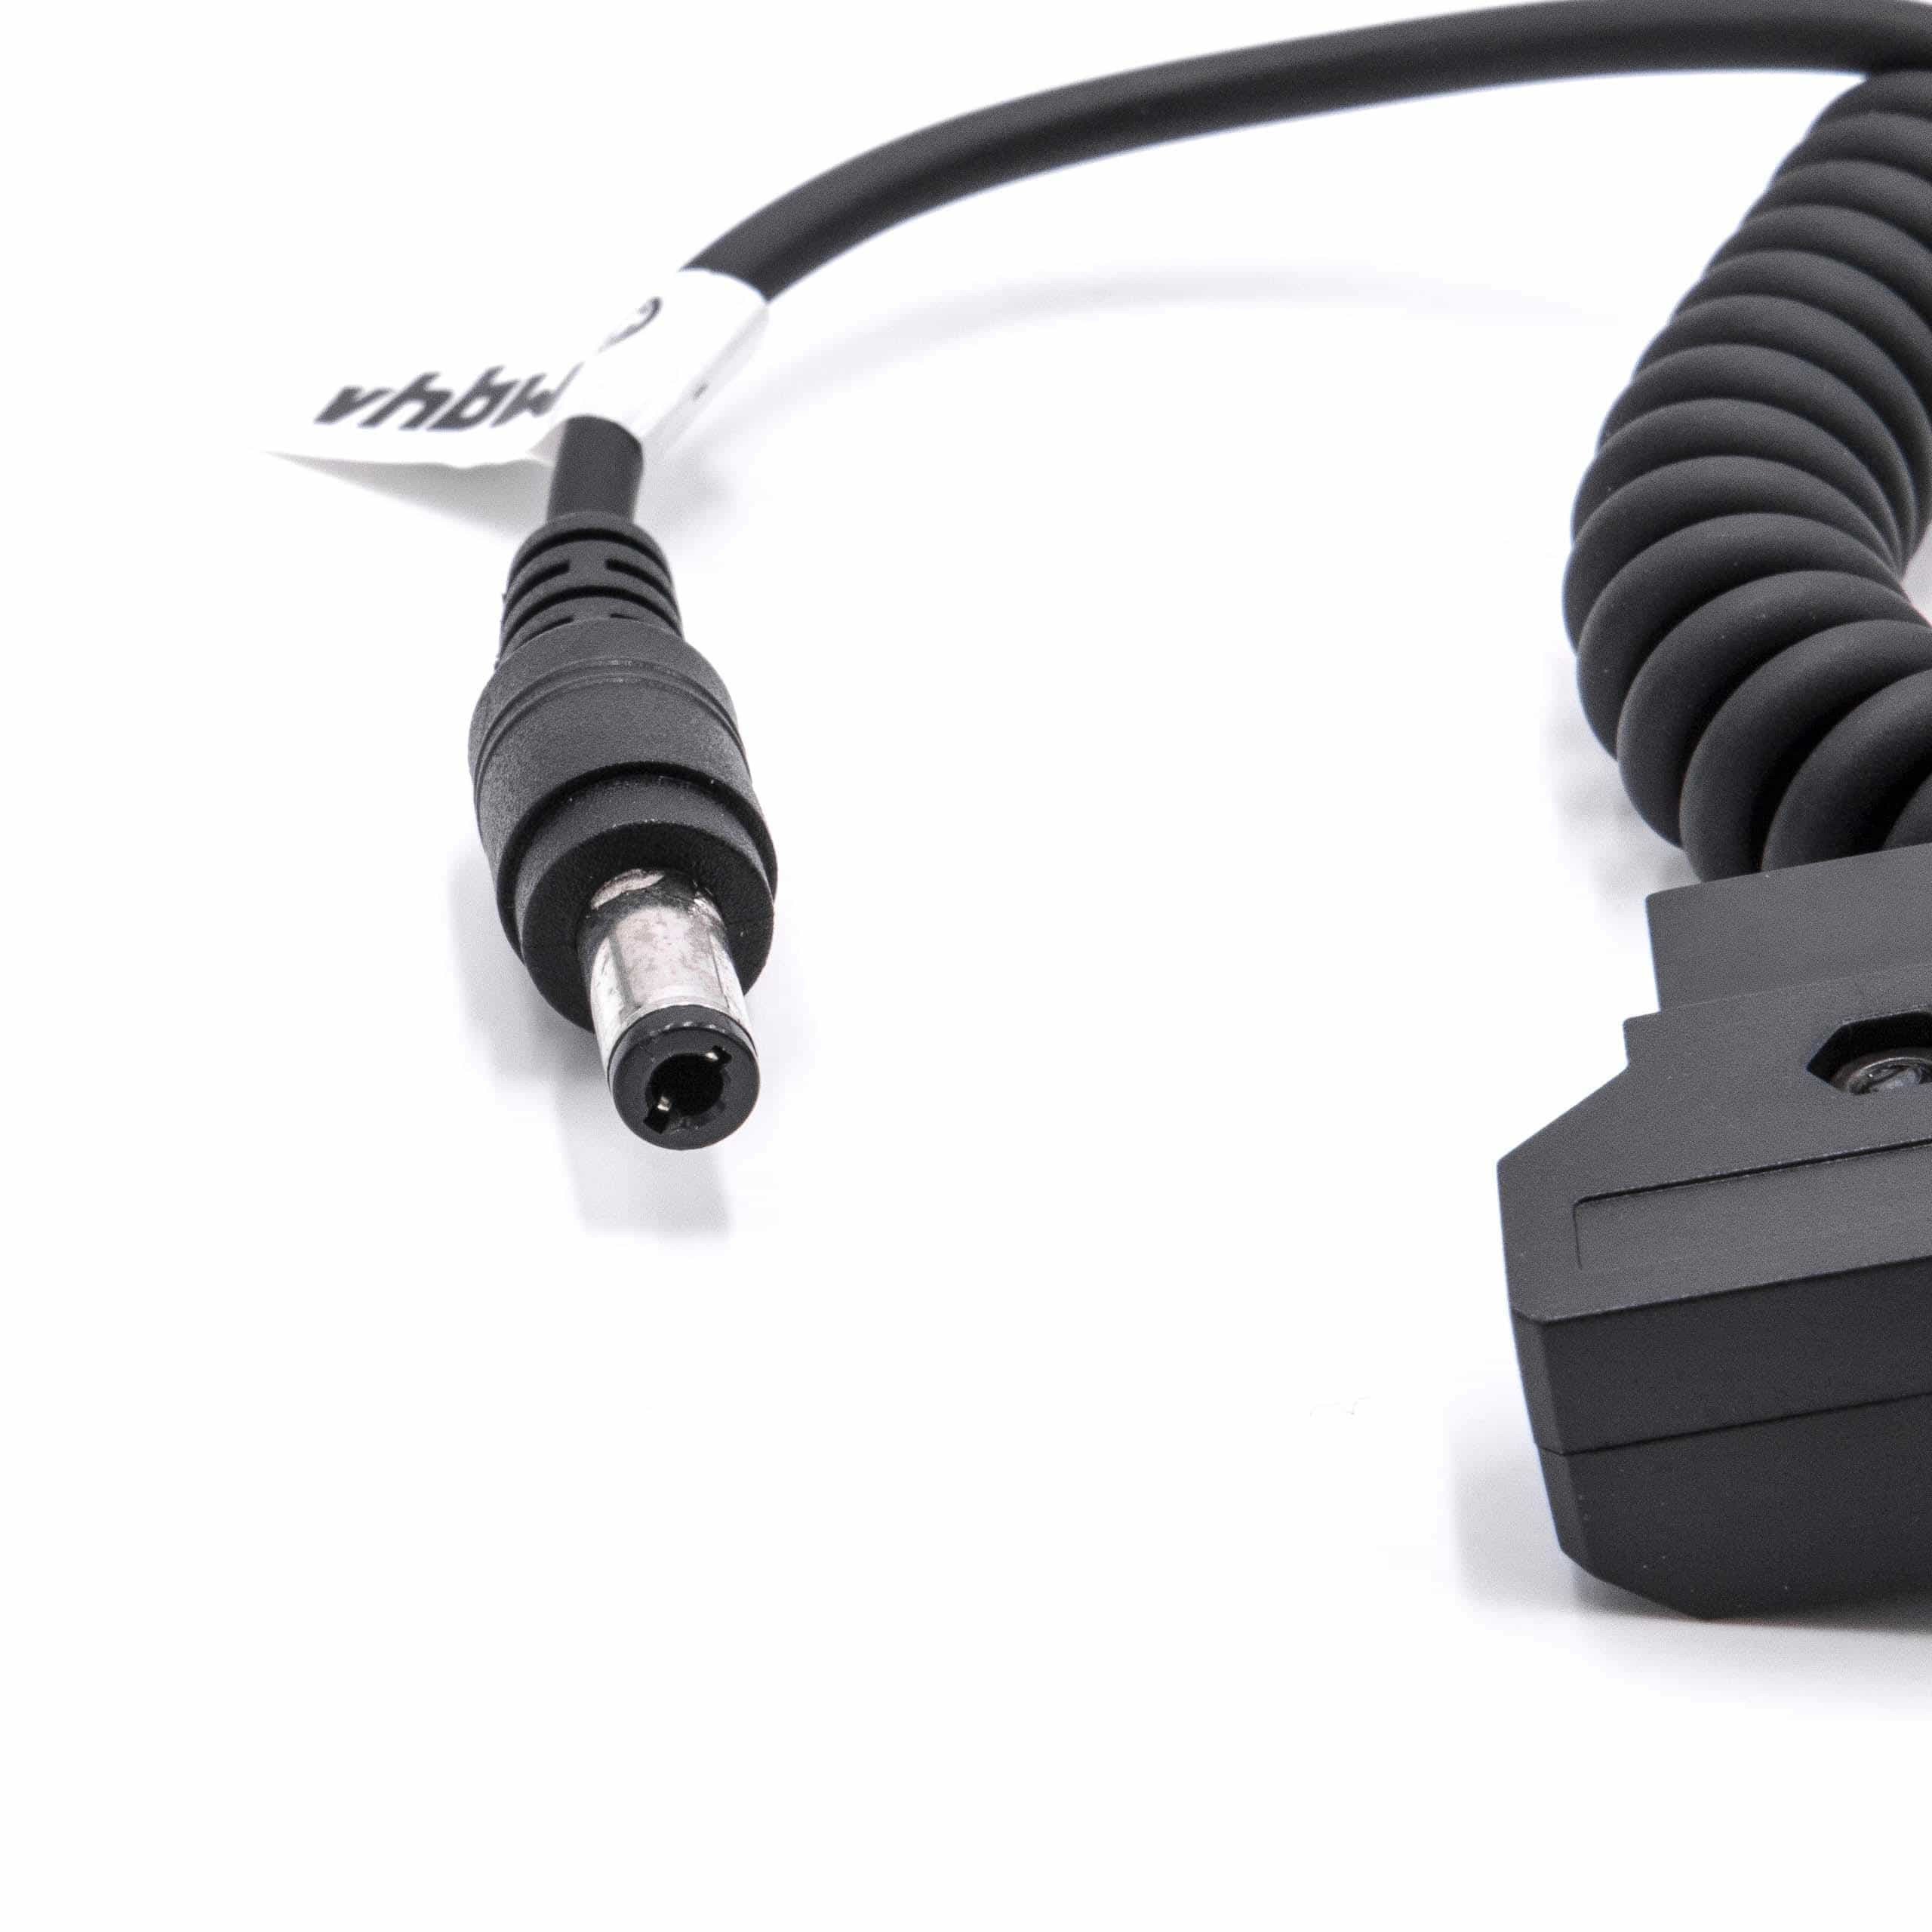 Cable adaptador D-Tap (m) a fuente alimentación LED para cámara Anton Bauer D-Tap, Dionic - negro